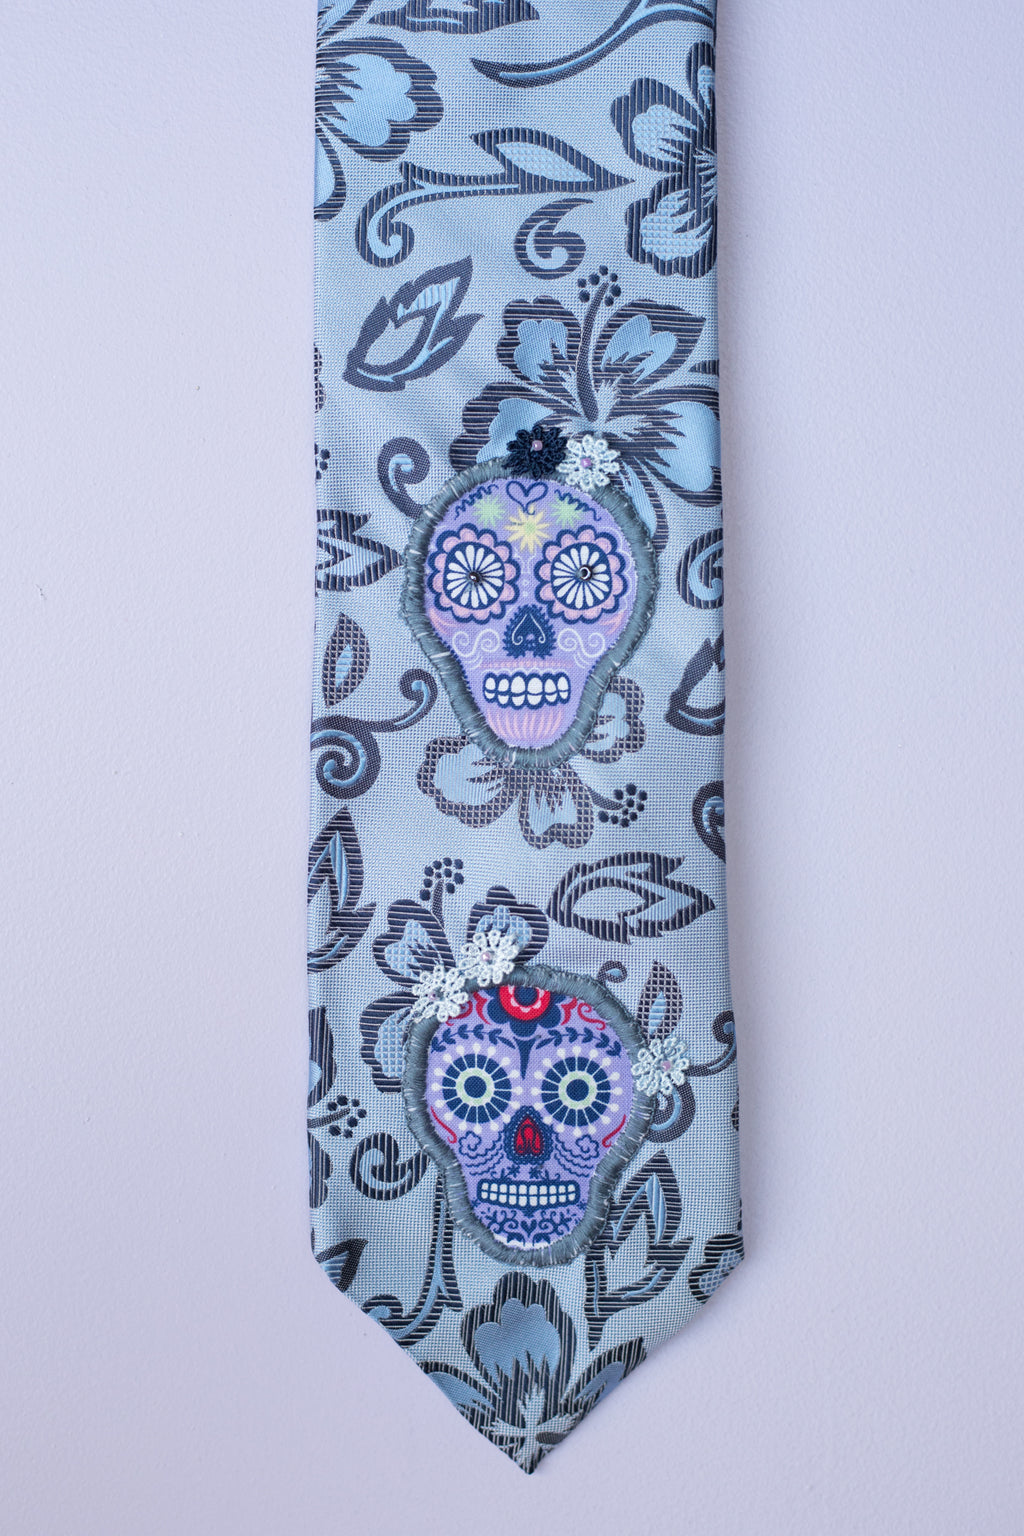 Silk tie in blue hues with sugar skulls